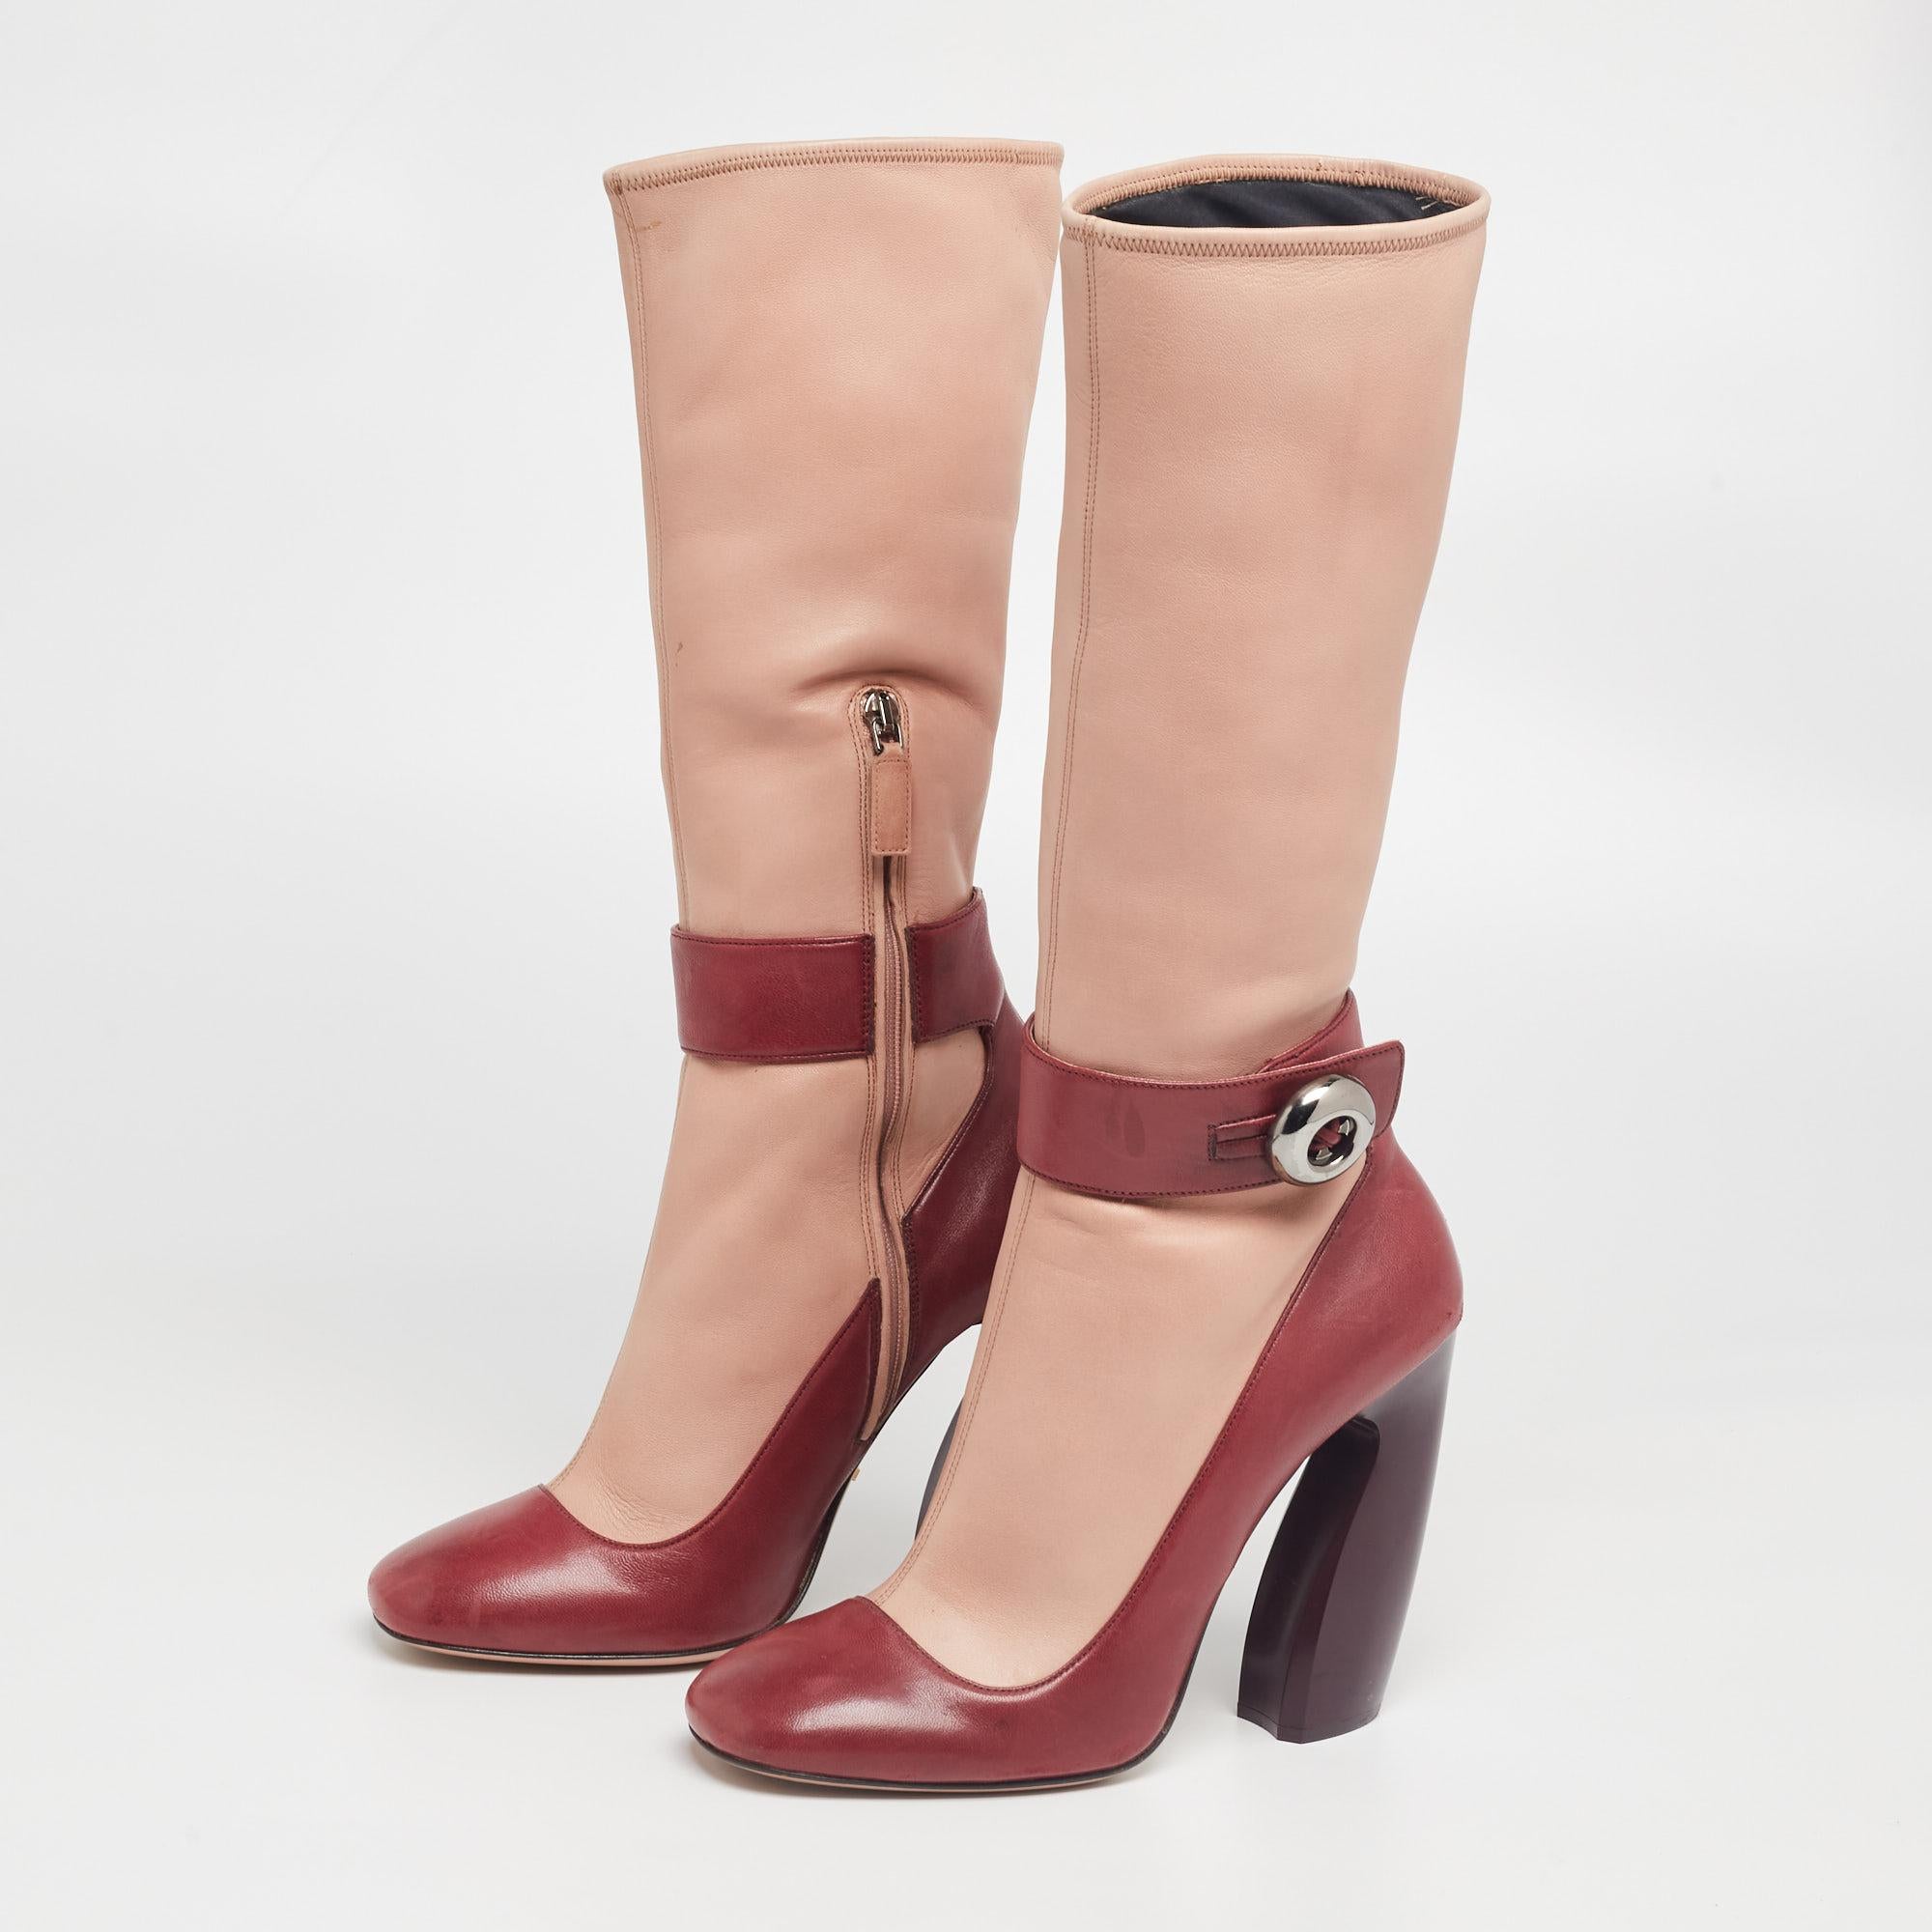 Prada Beige/Burgundy Leather Mid Calf Length Boots Size 39 1